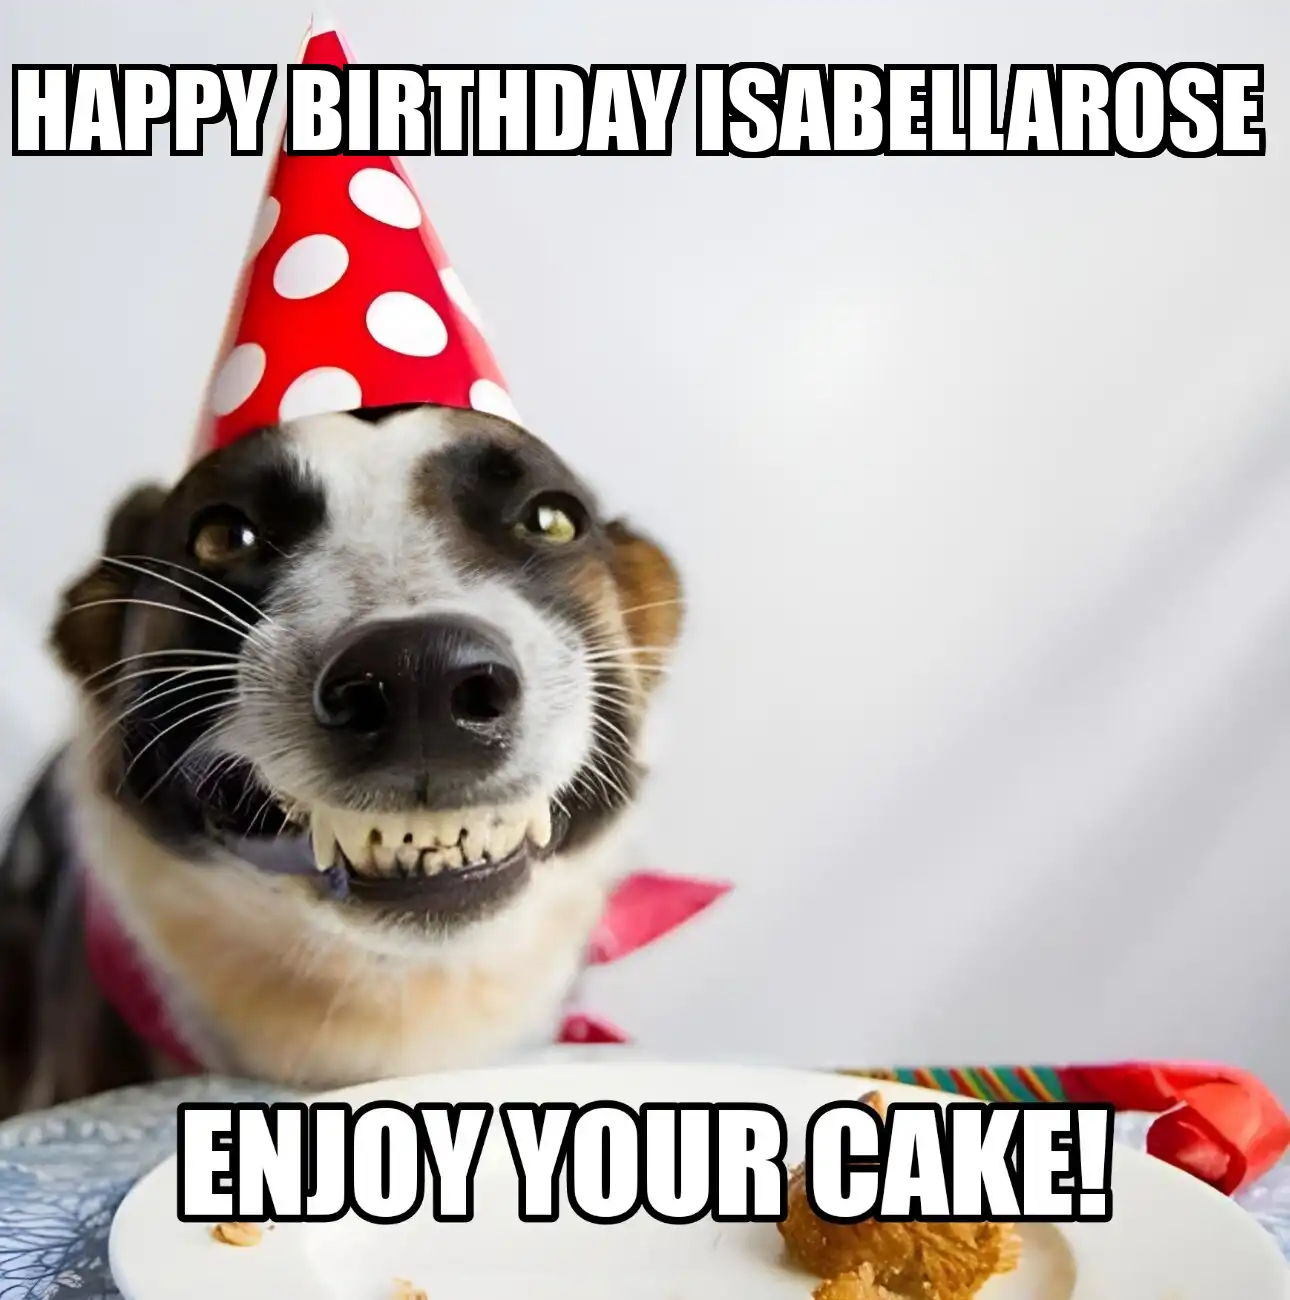 Happy Birthday Isabellarose Enjoy Your Cake Dog Meme